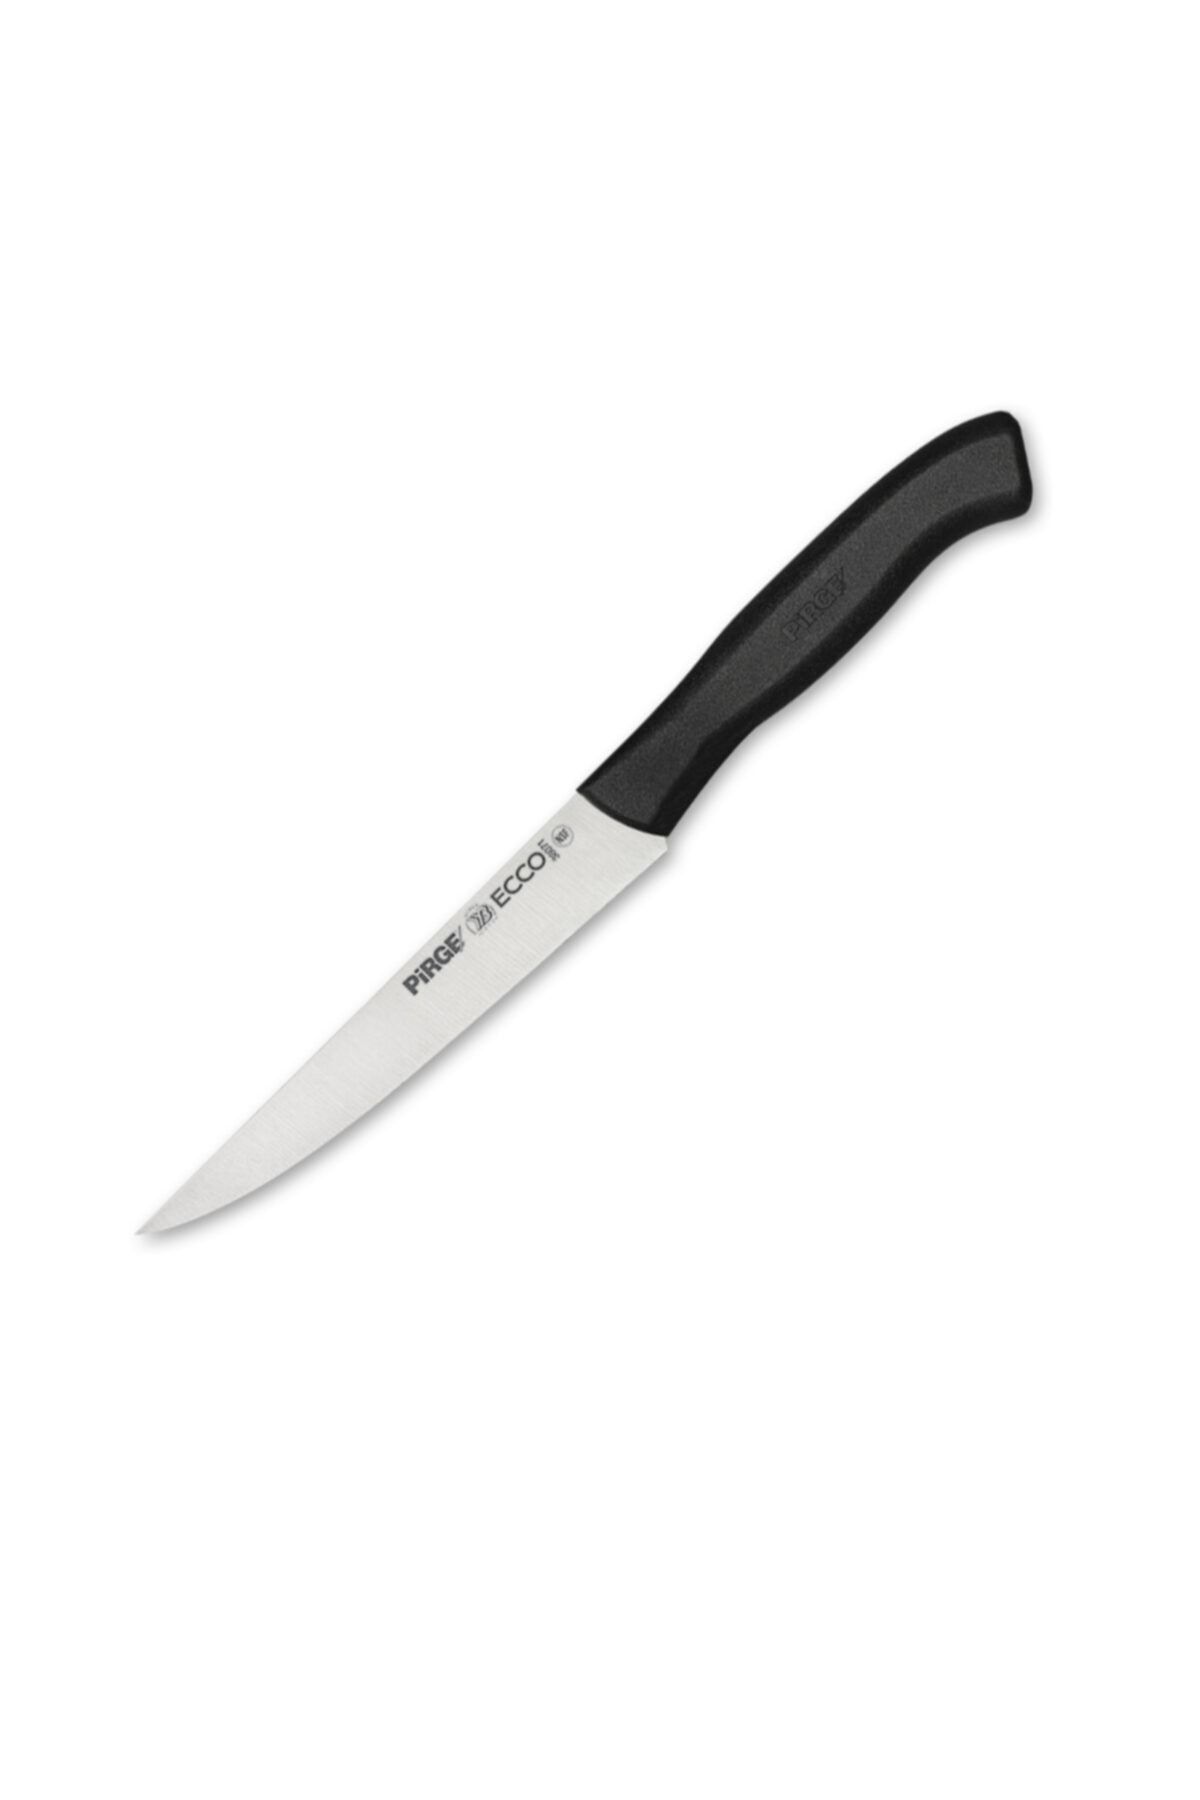 Pirge Ecco Mutfak Bıçağı 15,5 Cm